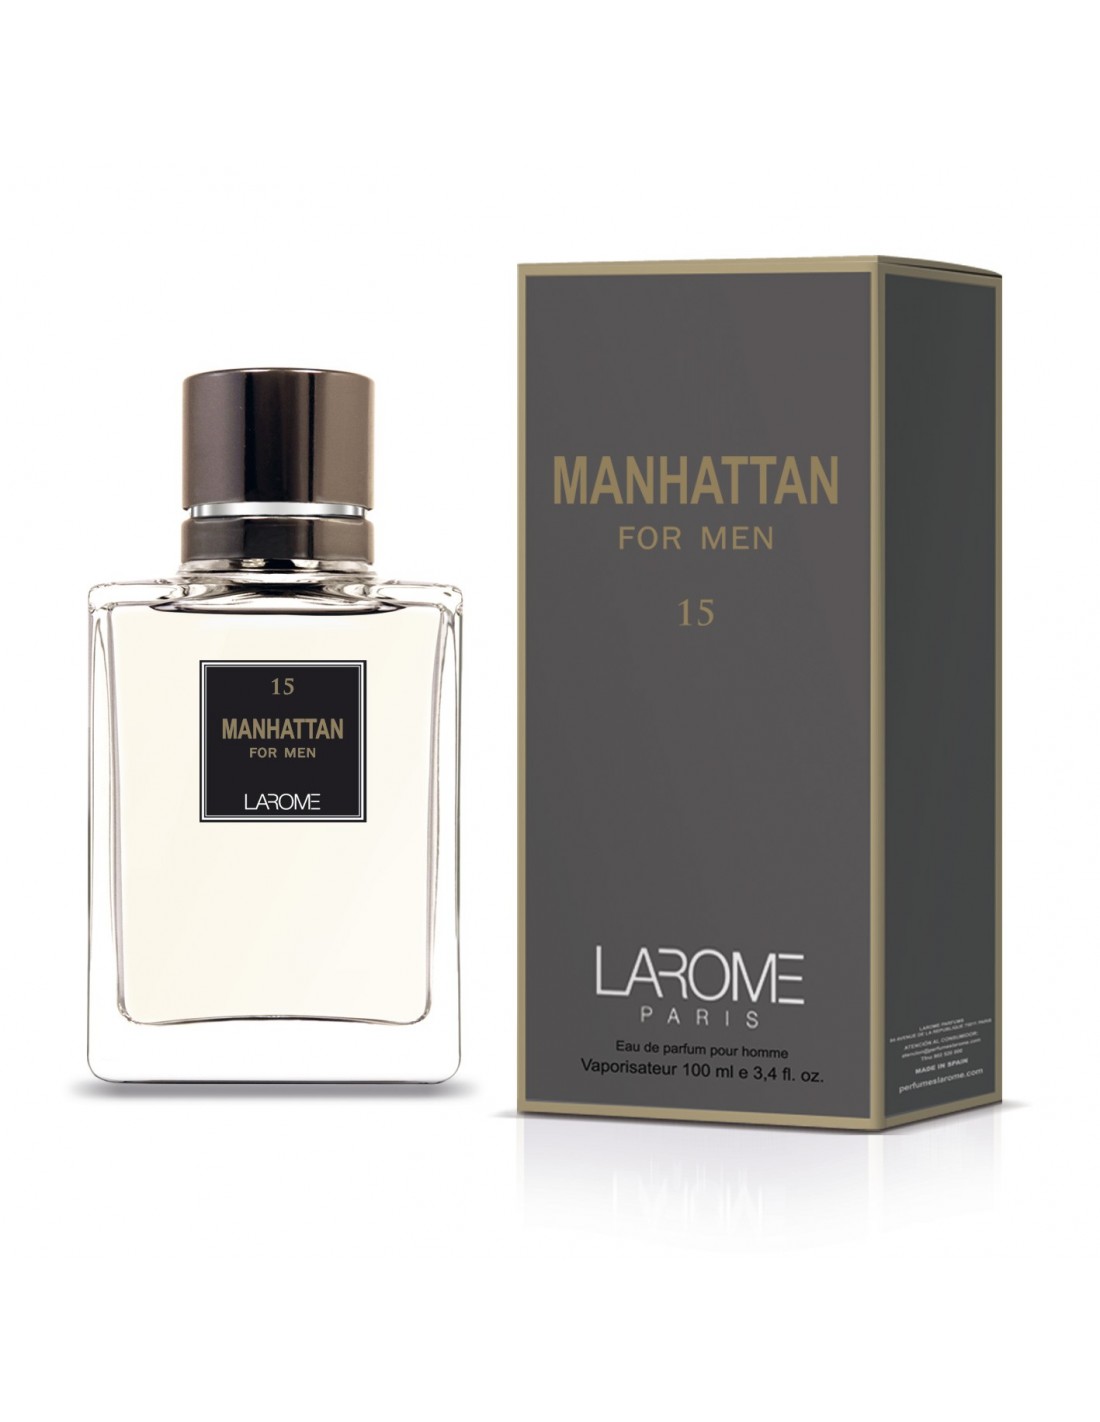 ▷ MANHATTAN FOR MEN by LAROME ✶ Perfume for man Size 100ml